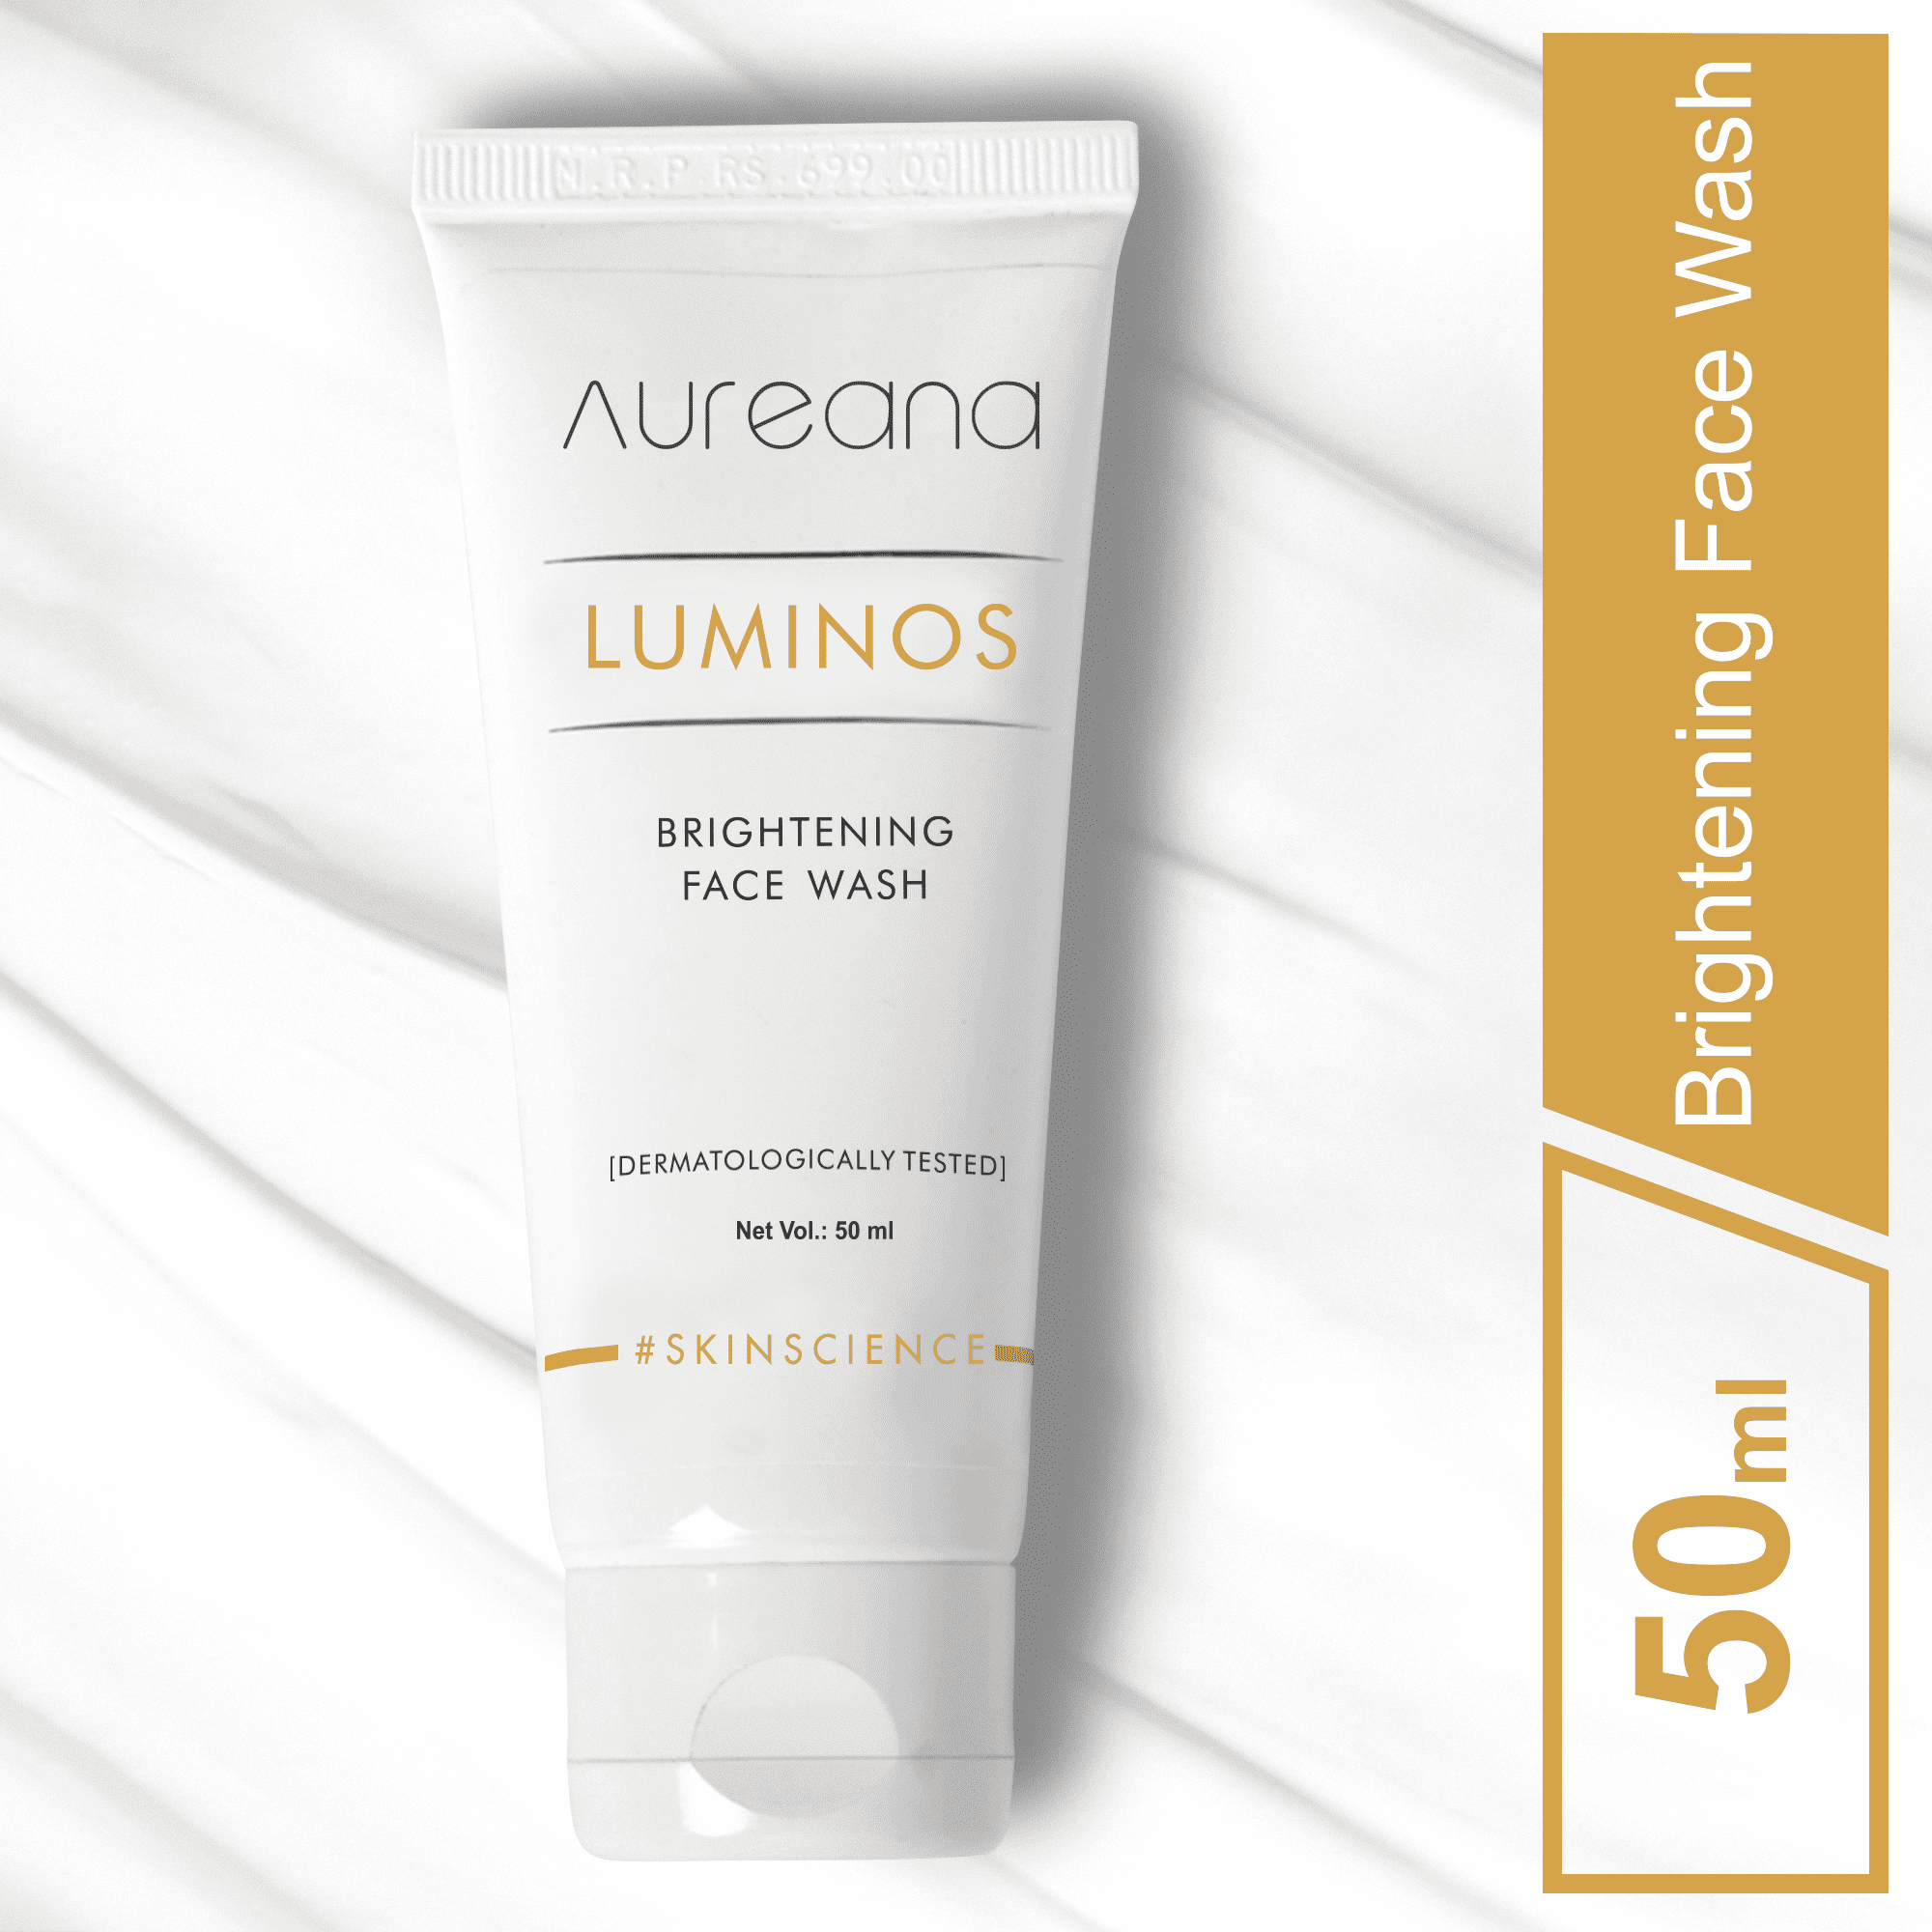 Aureana Luminos Brightening Face Wash - 50 ml